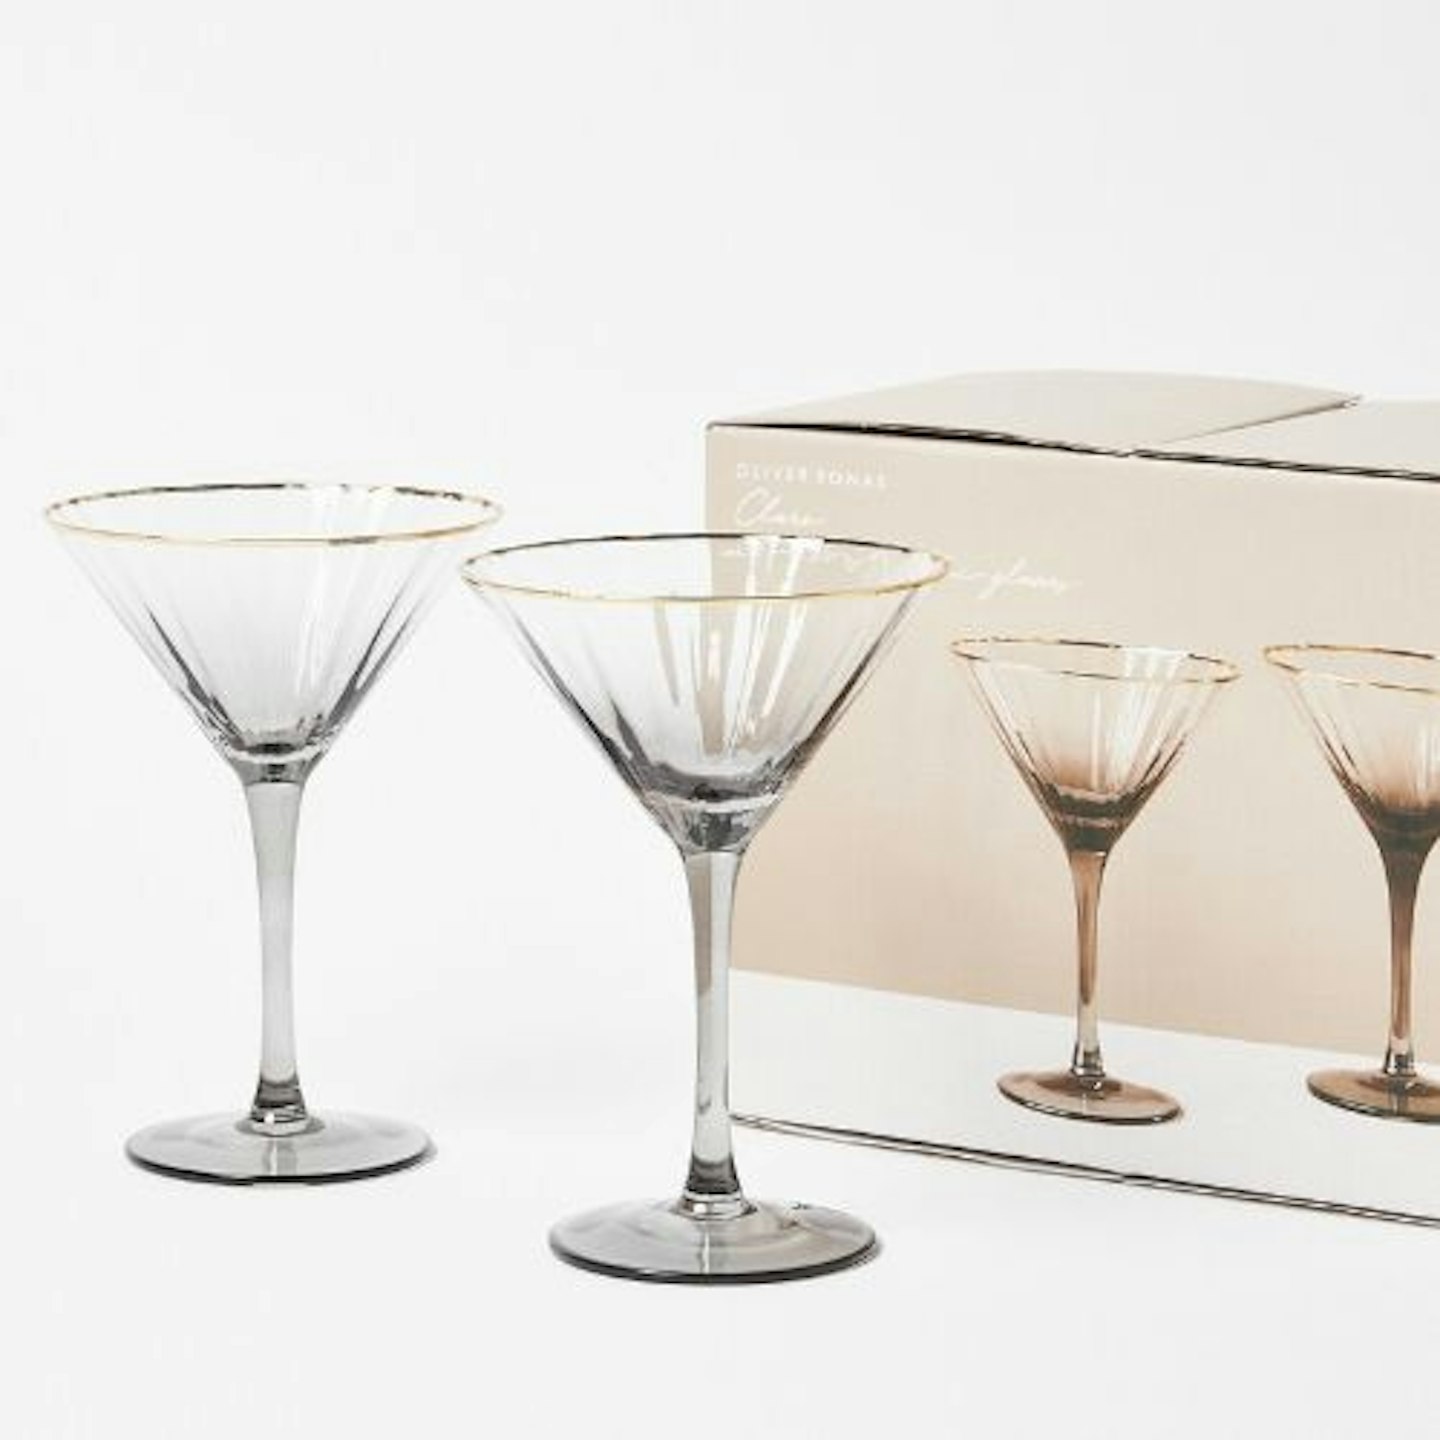 Oliver Bonas Claro Grey Martini Glasses Set of Two